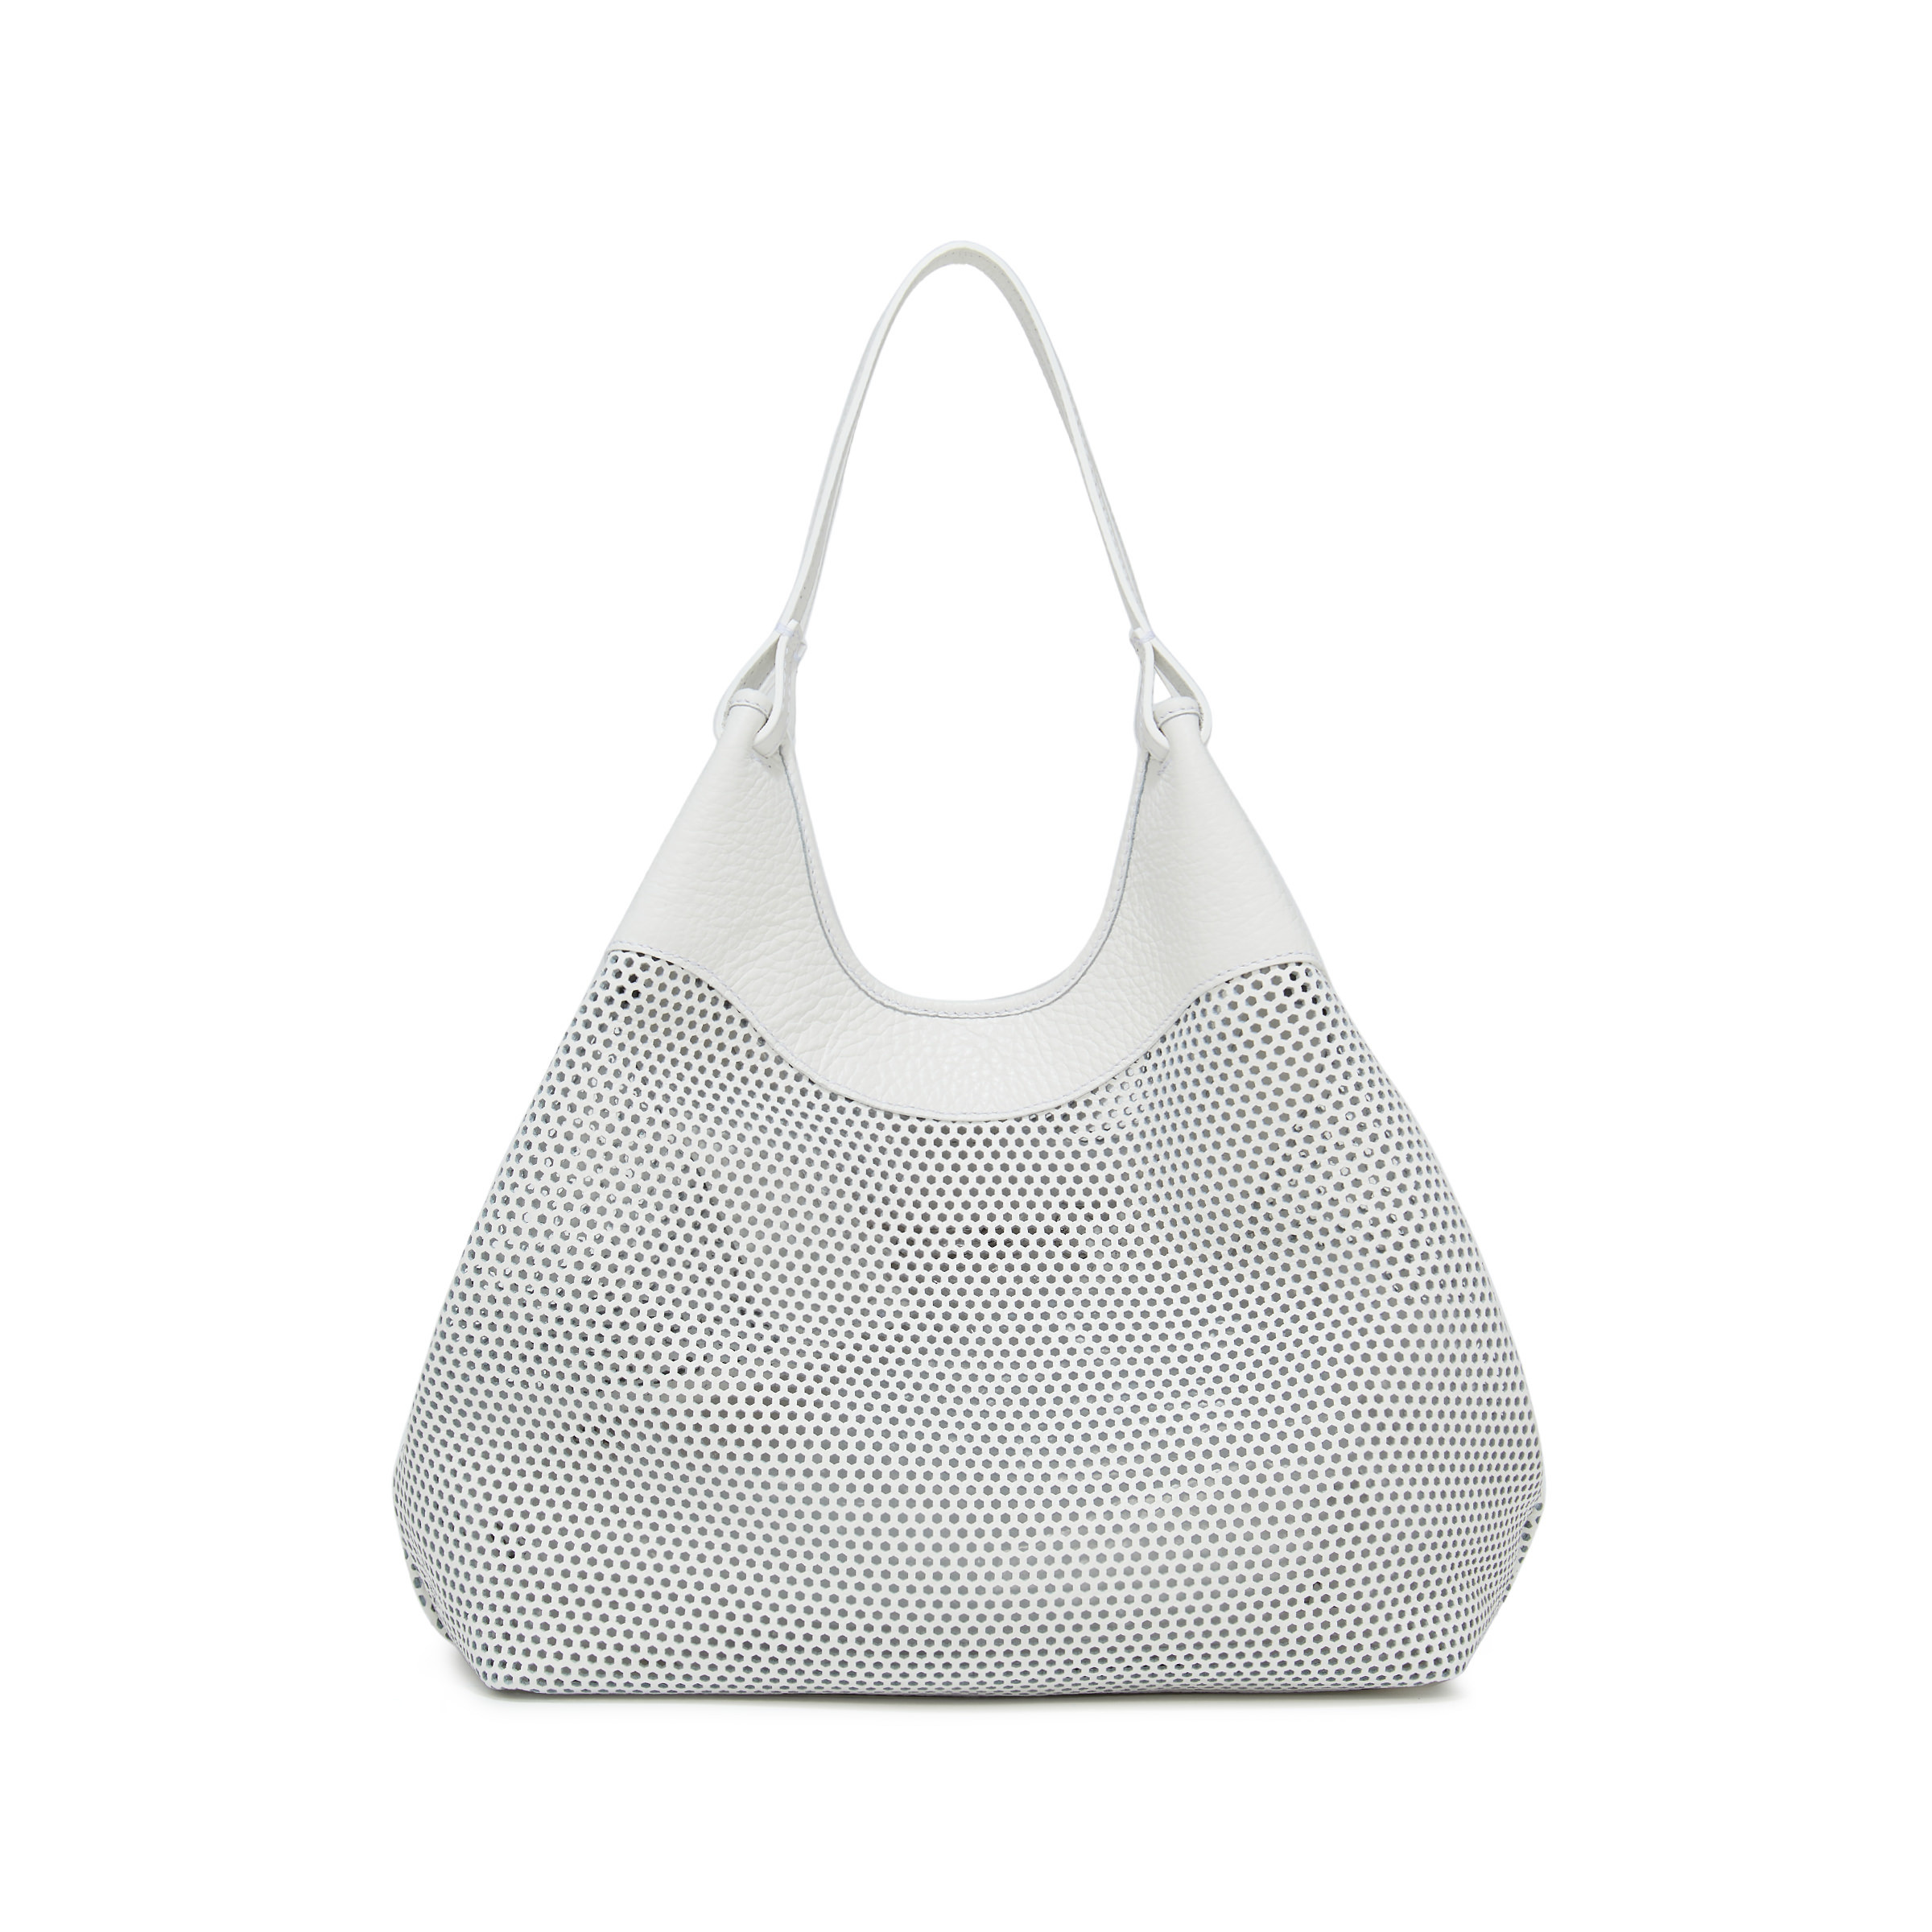 Gianni Chiarini - Dua bag in leather, White, large image number 0